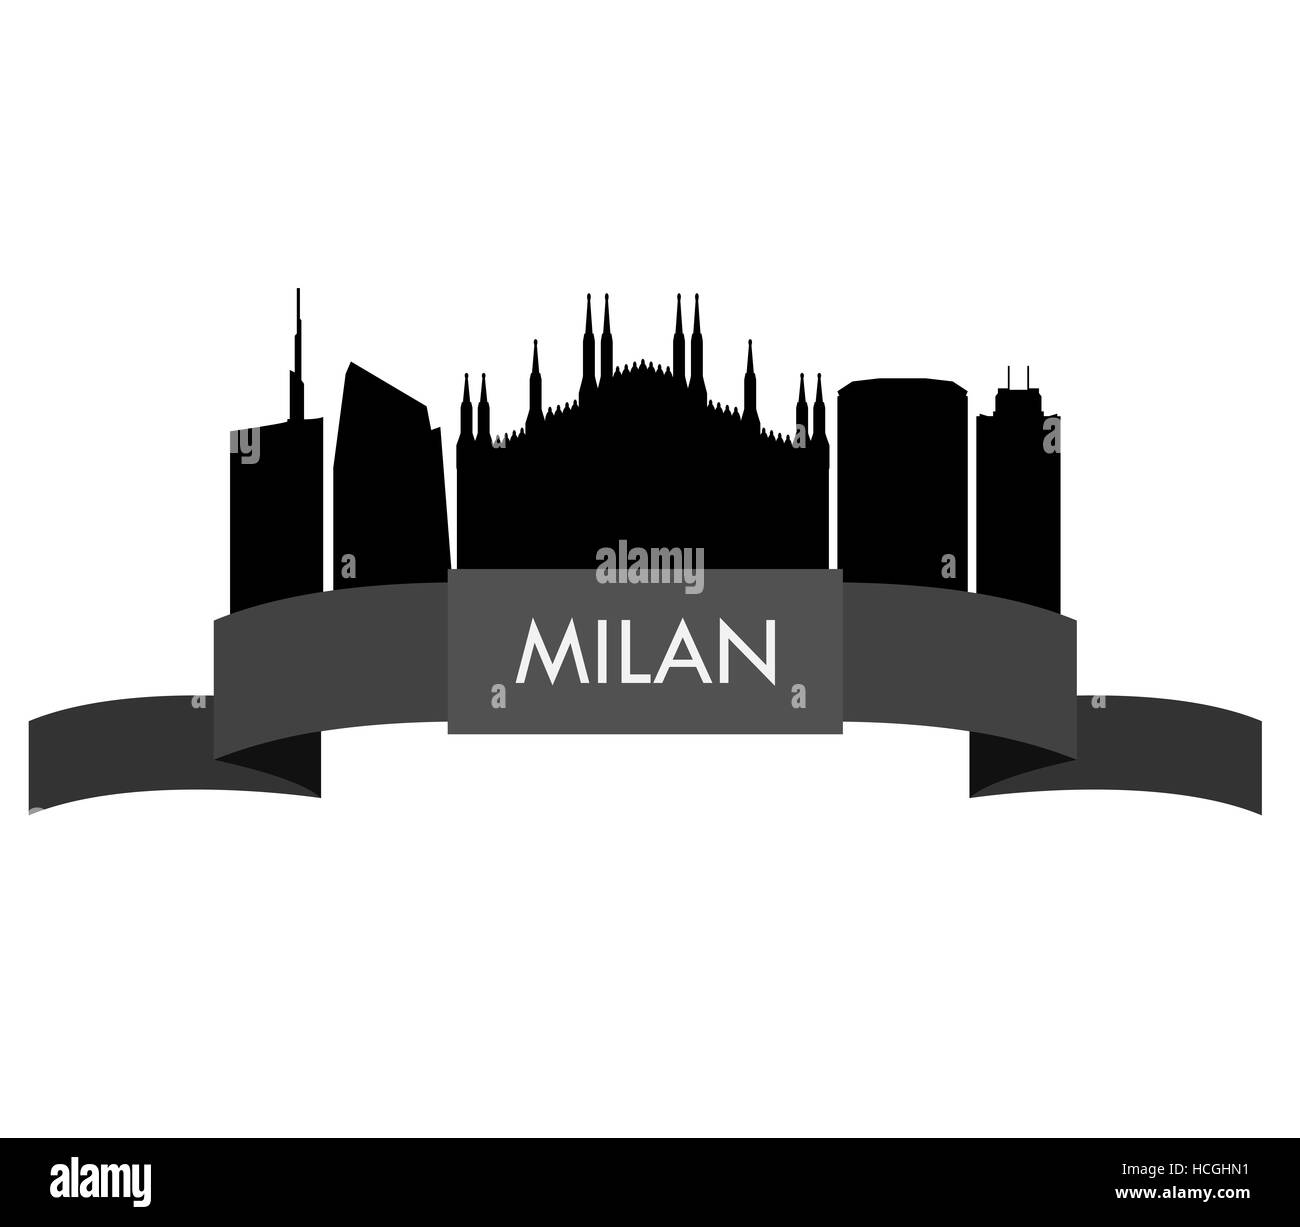 milan skyline Stock Photo